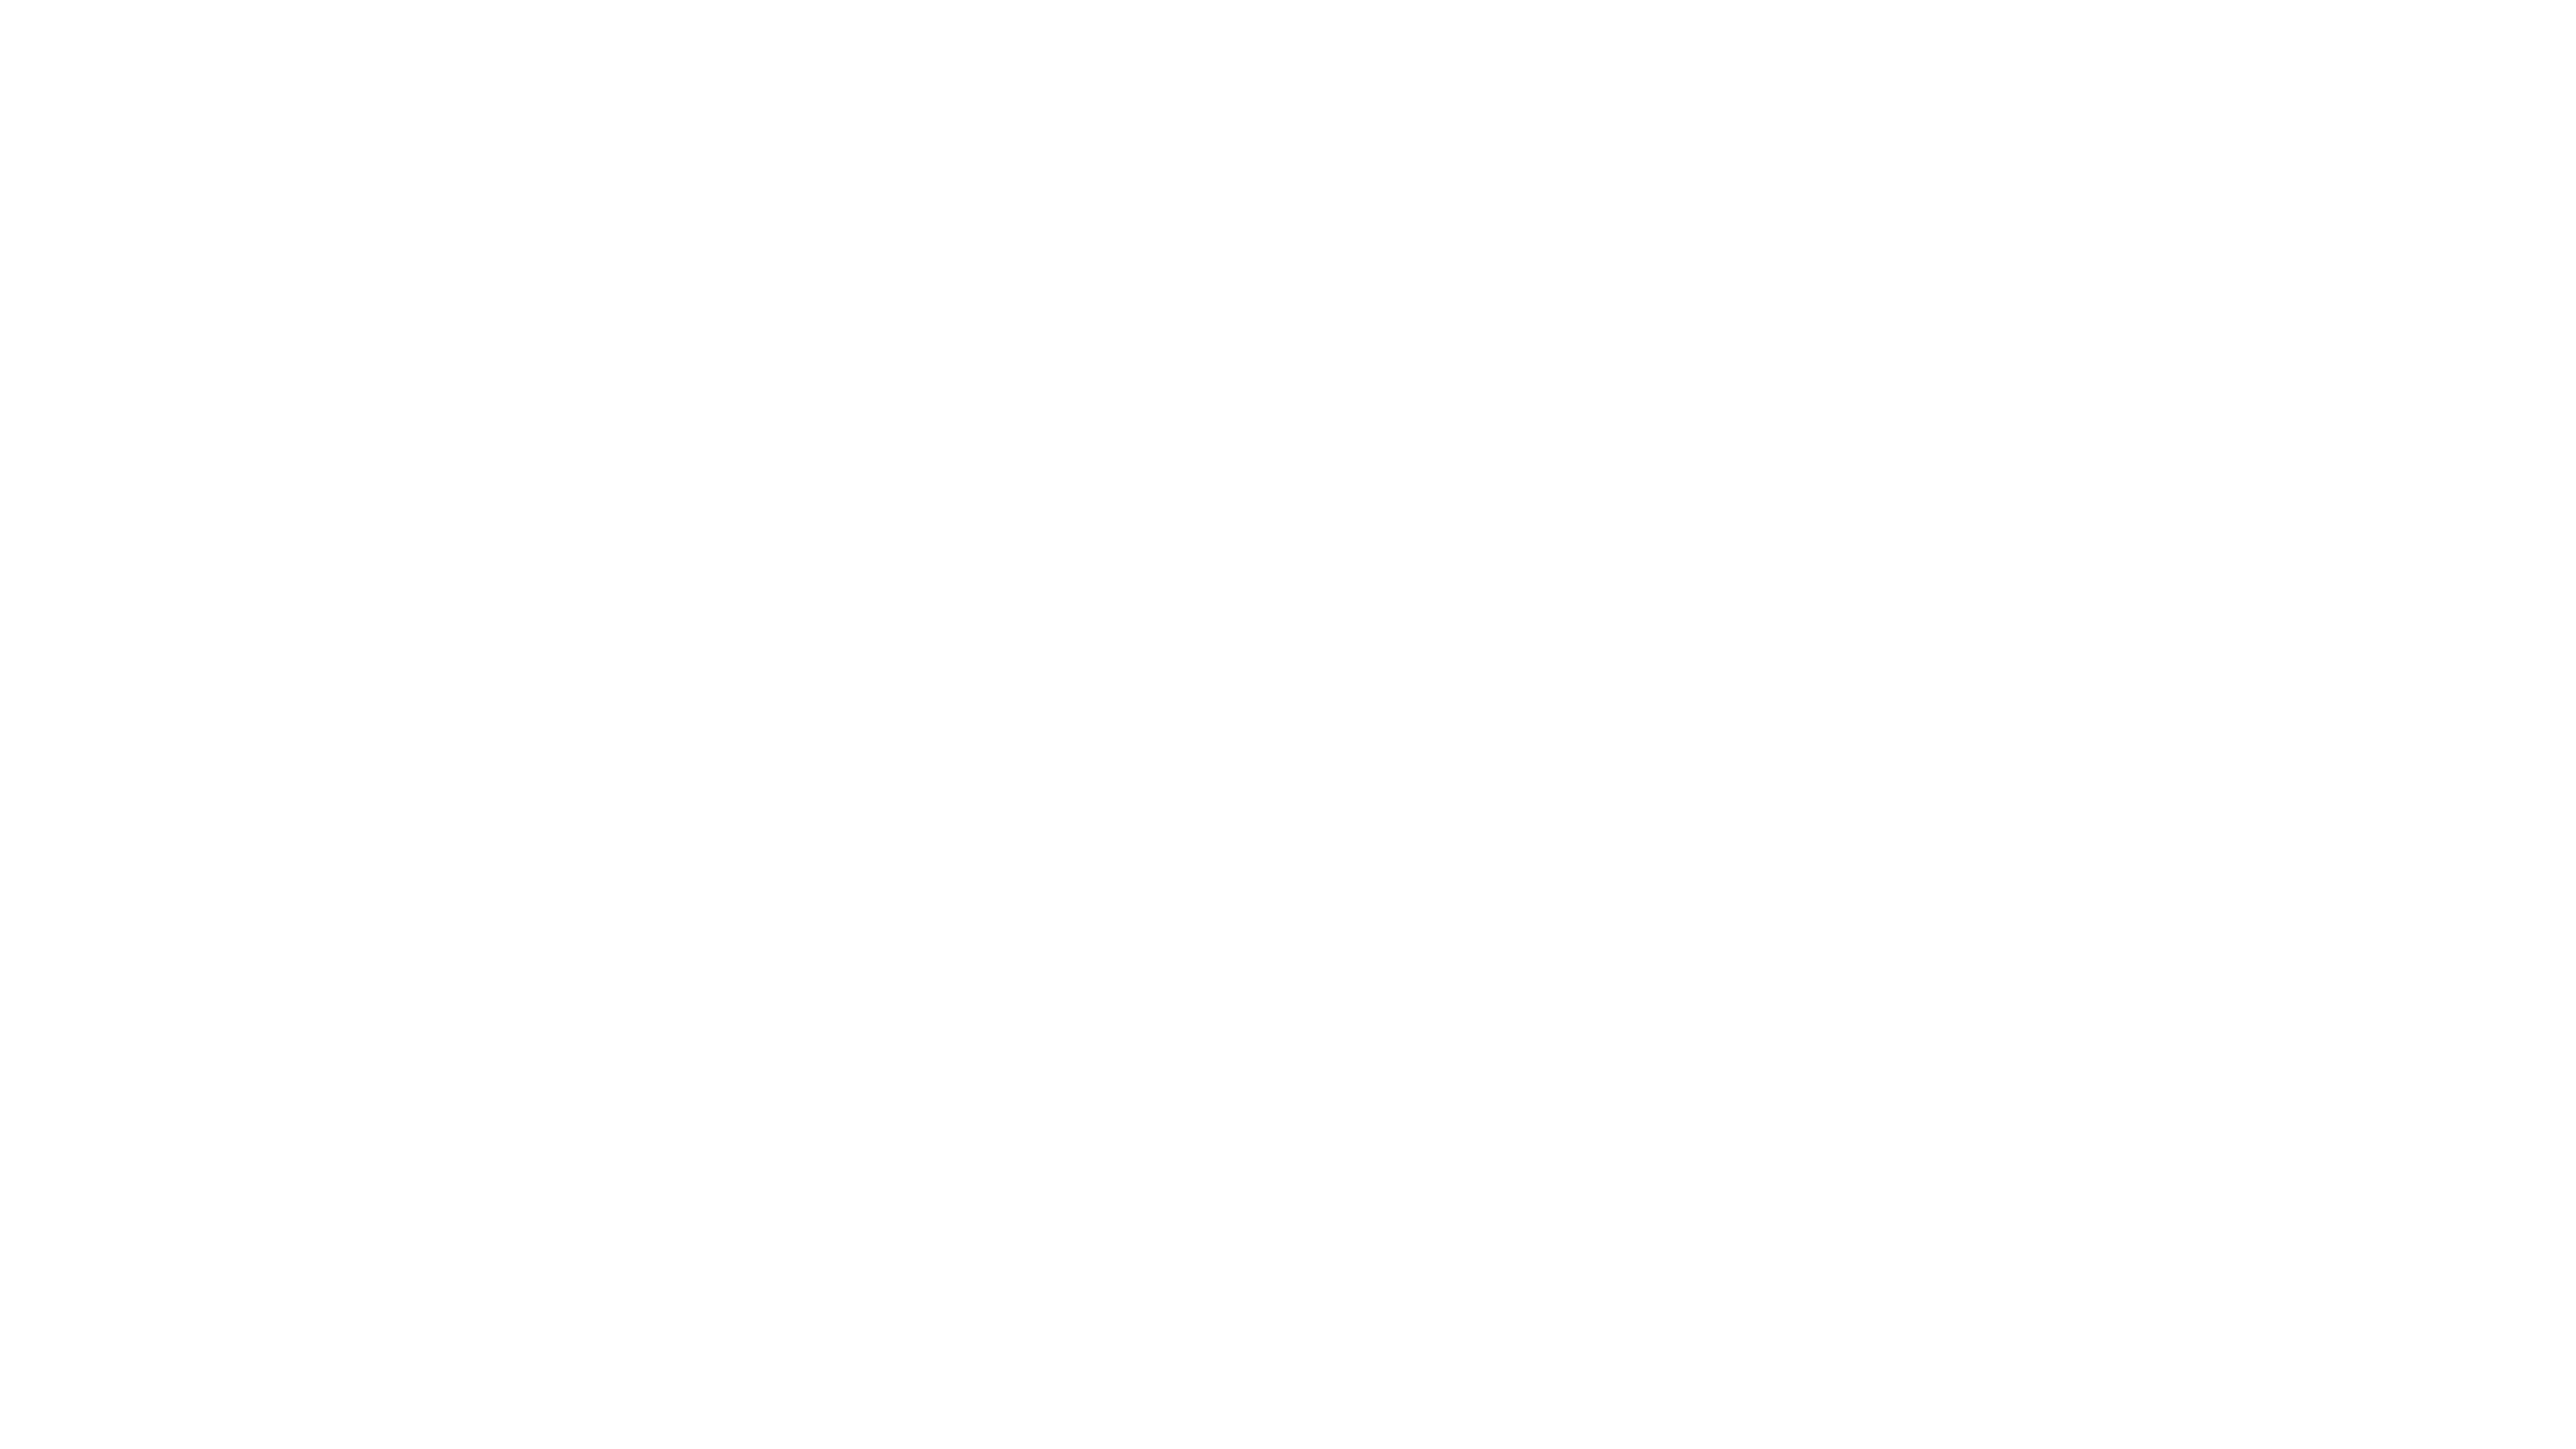 MTV Cribs Italia - Challenge